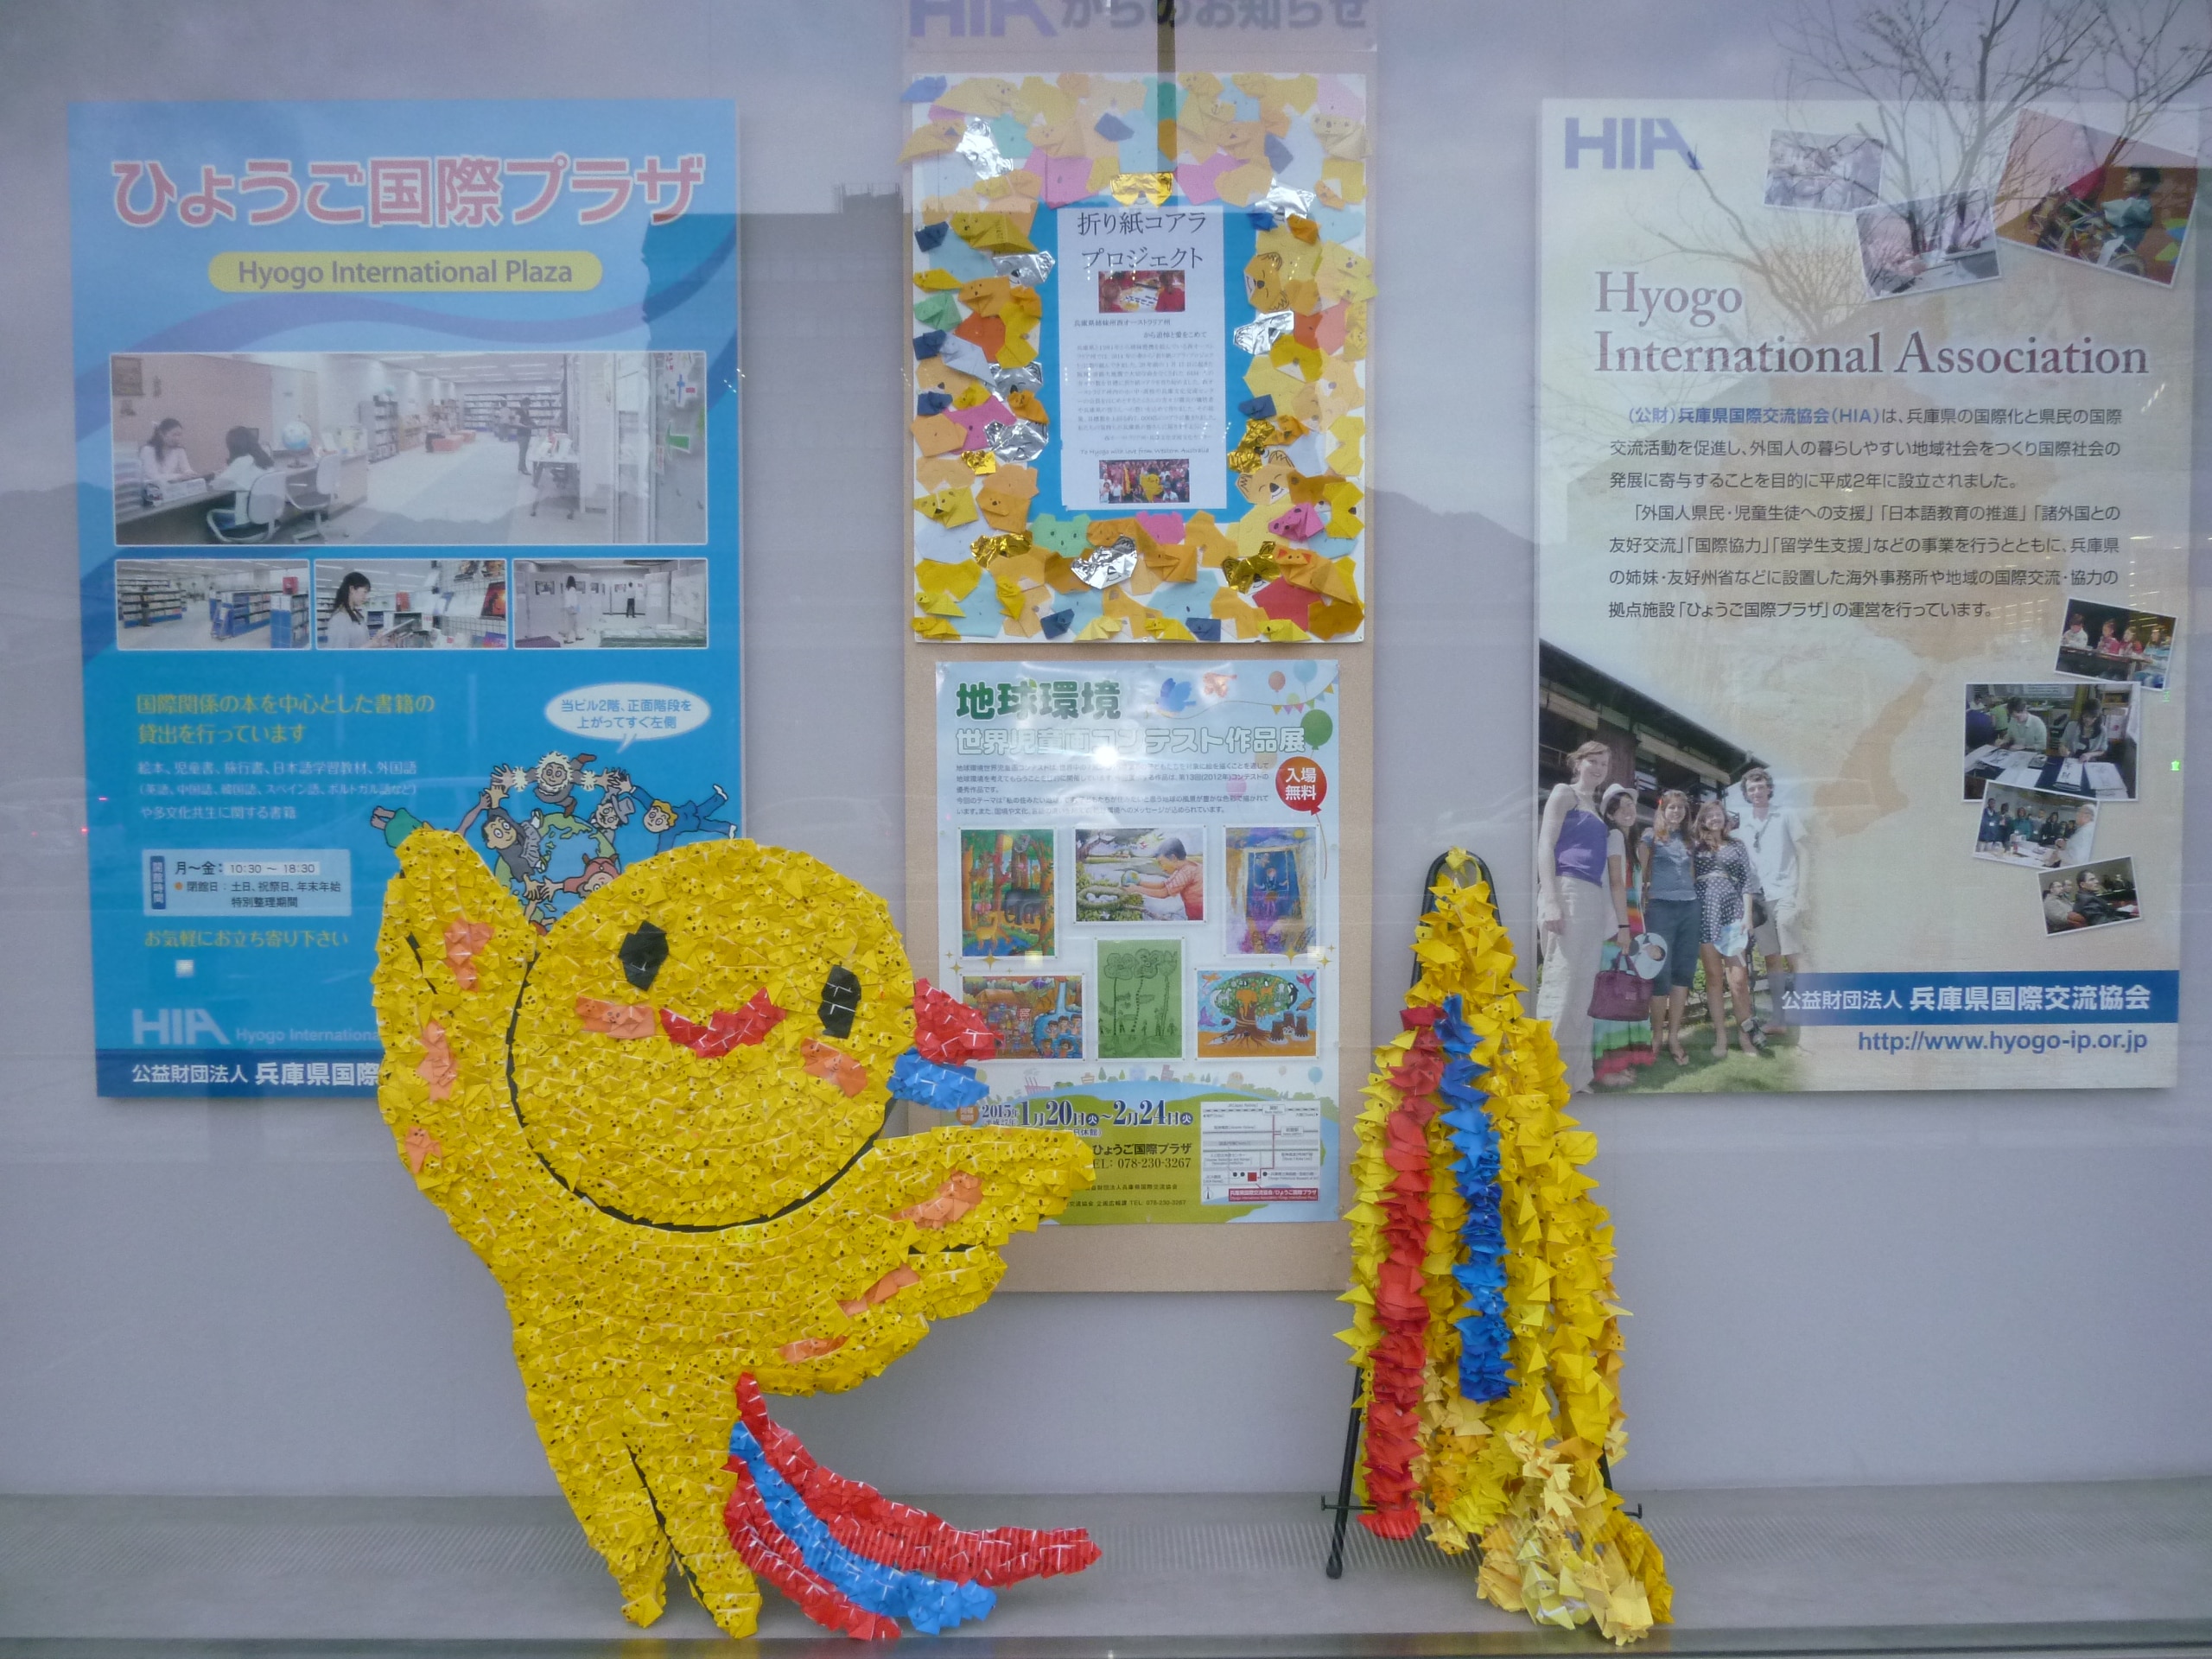 To mark the 20th anniversary of the Great Hanshin-Awaji earthquake, students in WA made origami koalas and stuck them together to make a big Habatan,